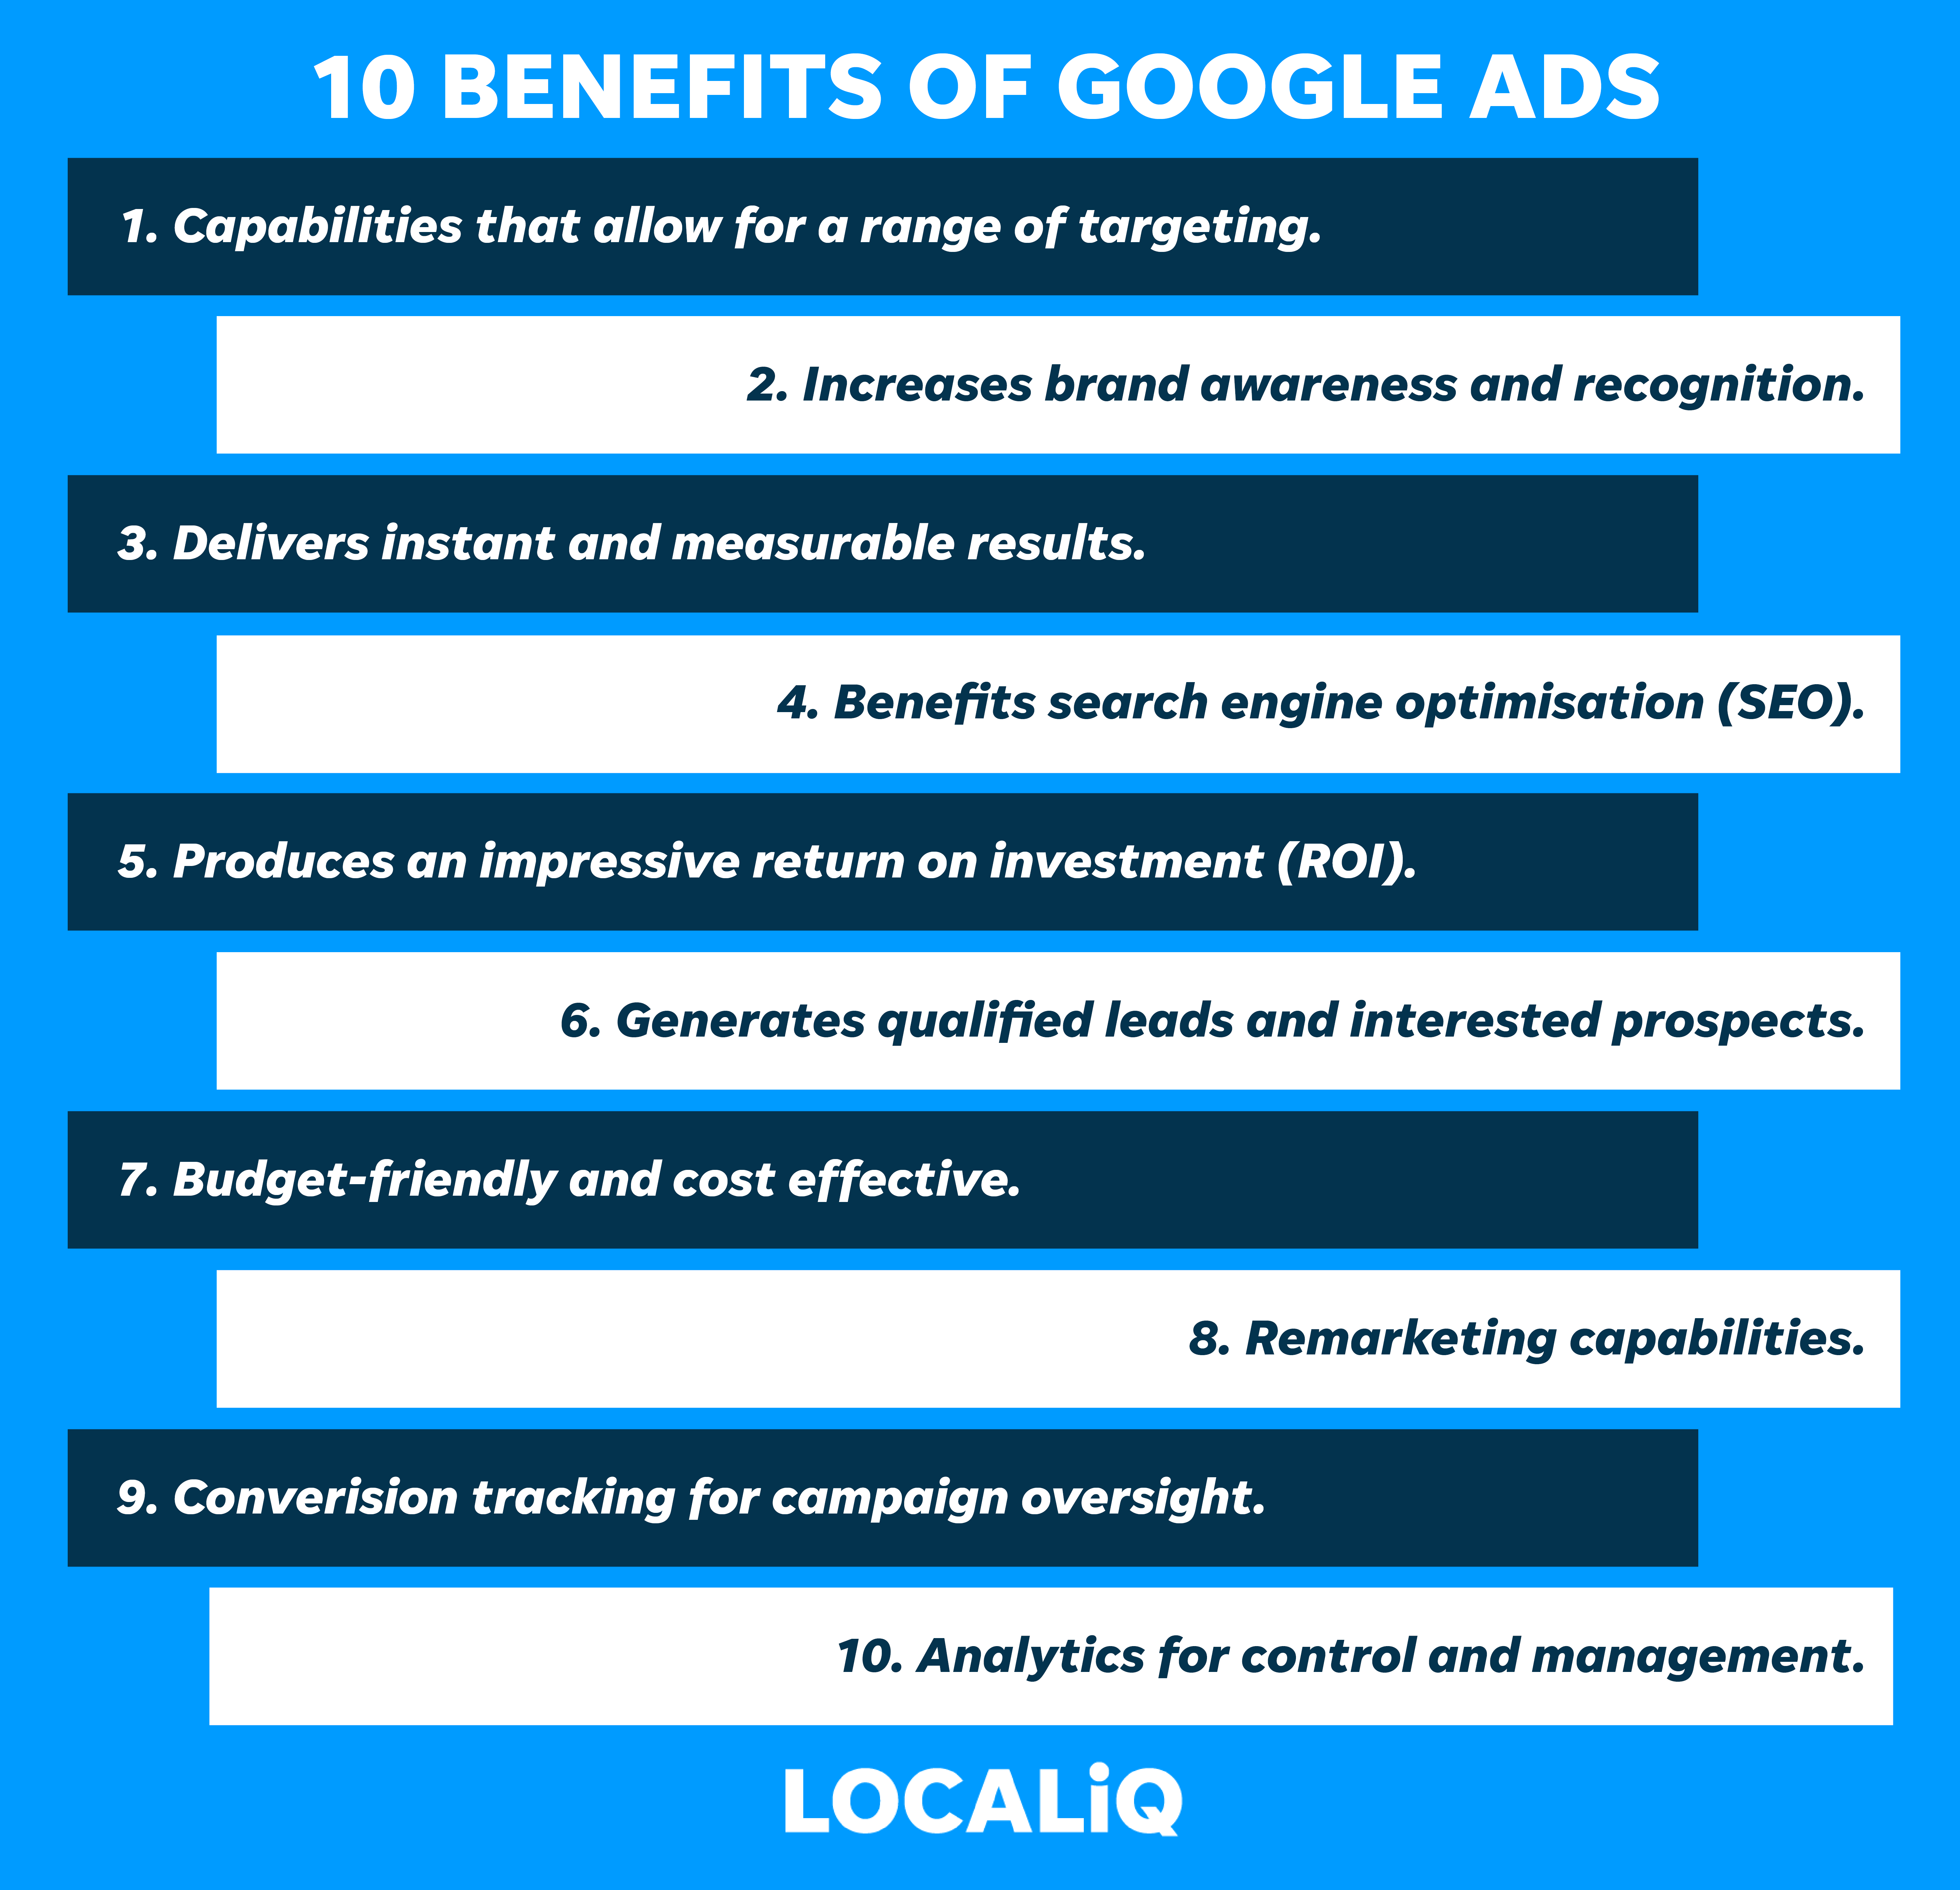 10 benefits of Google Ads